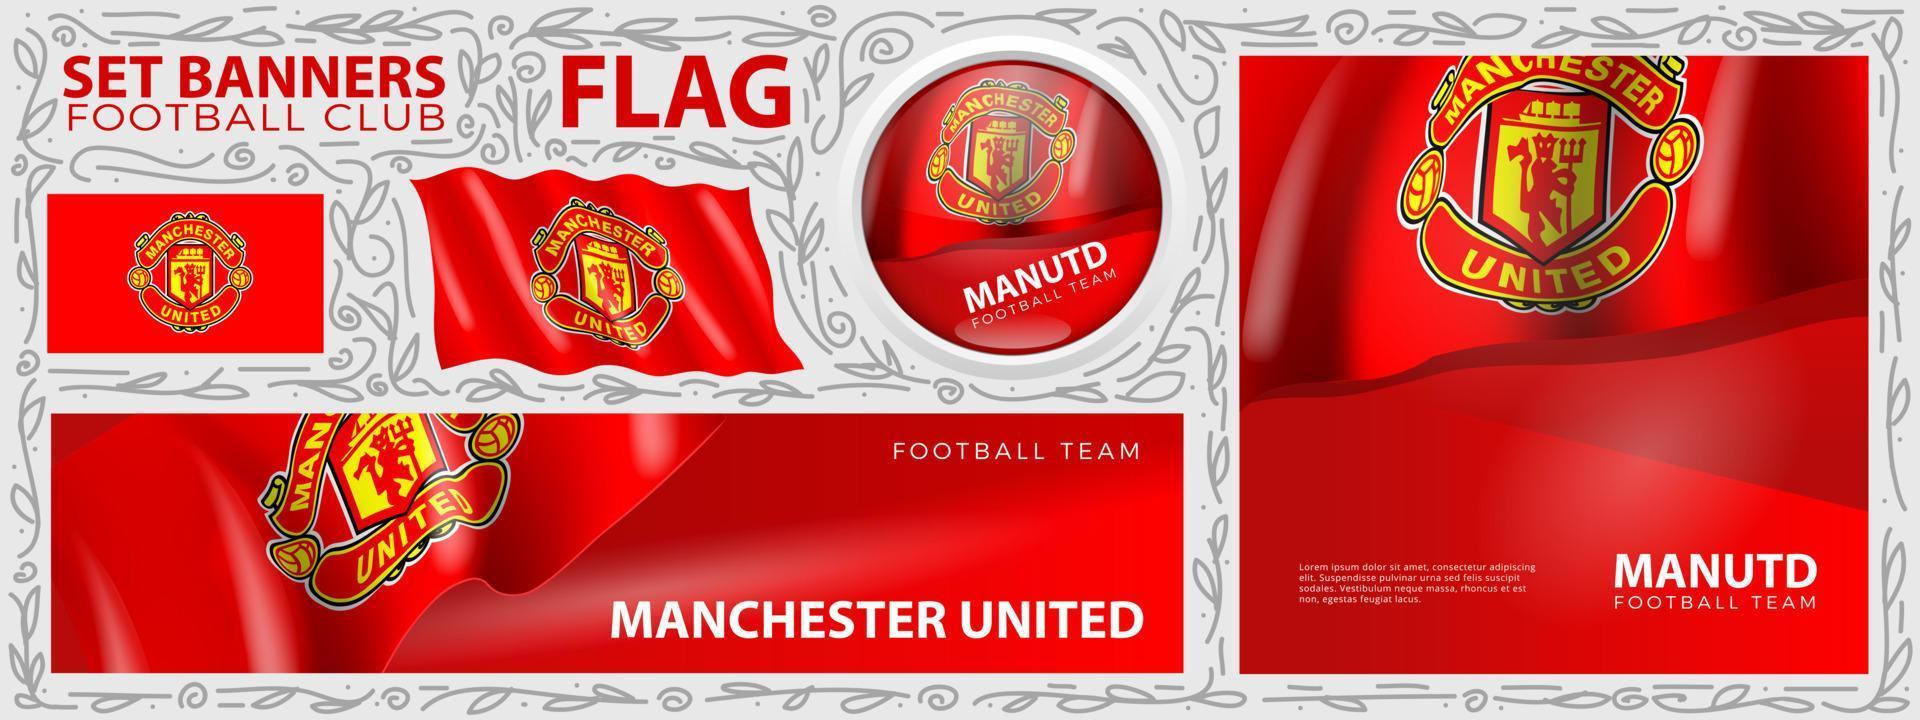 Manchester united flag. Set of Banners. Greeting card, Banner, Flyer design vector